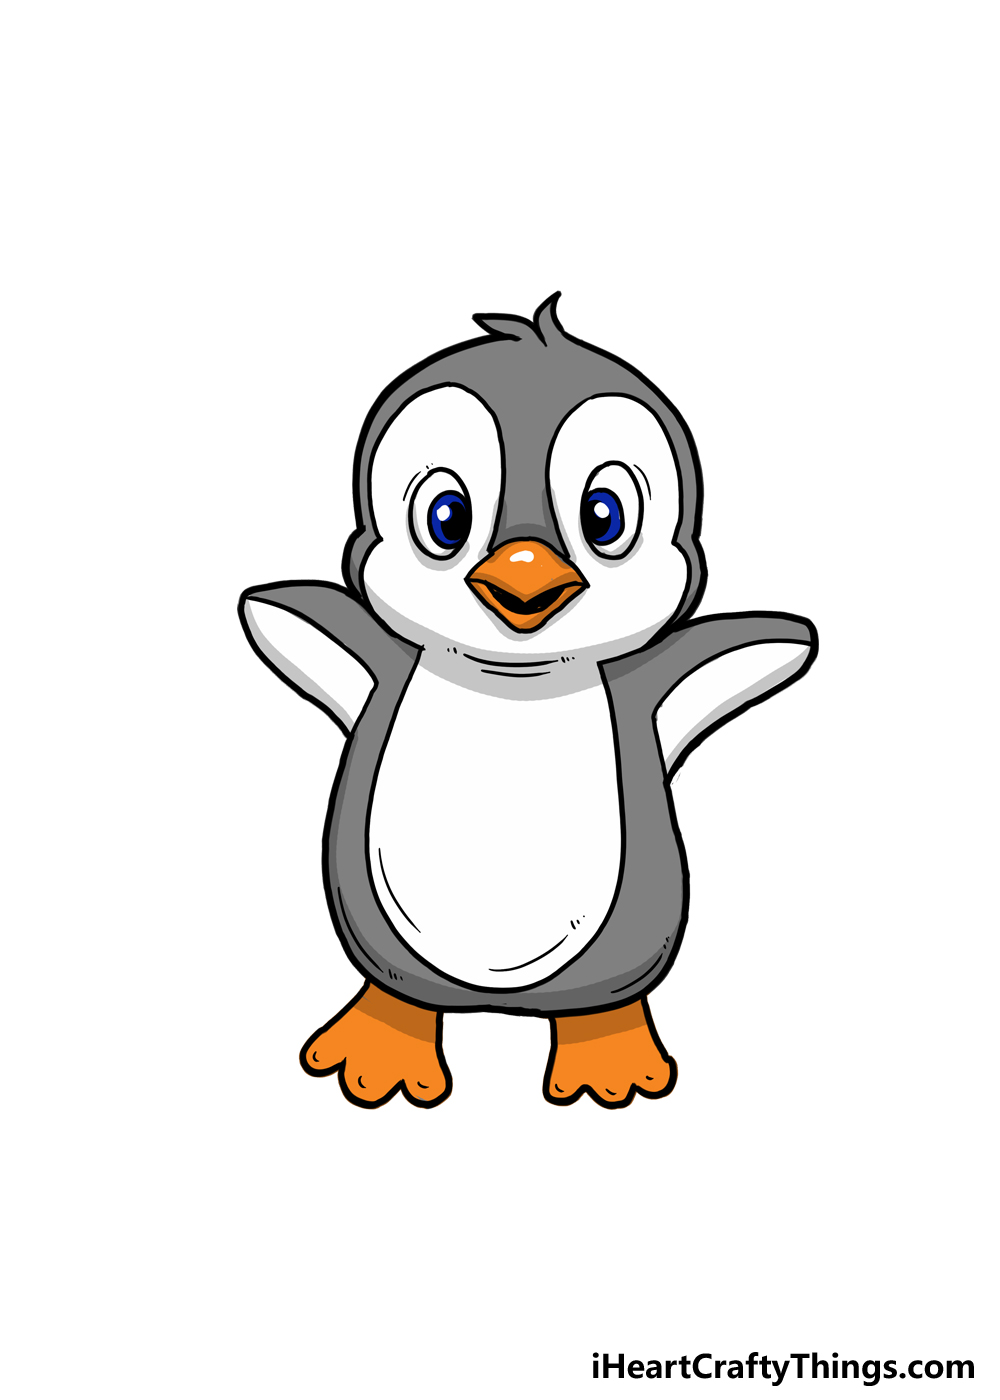 How to Draw A Cartoon Penguin step 6